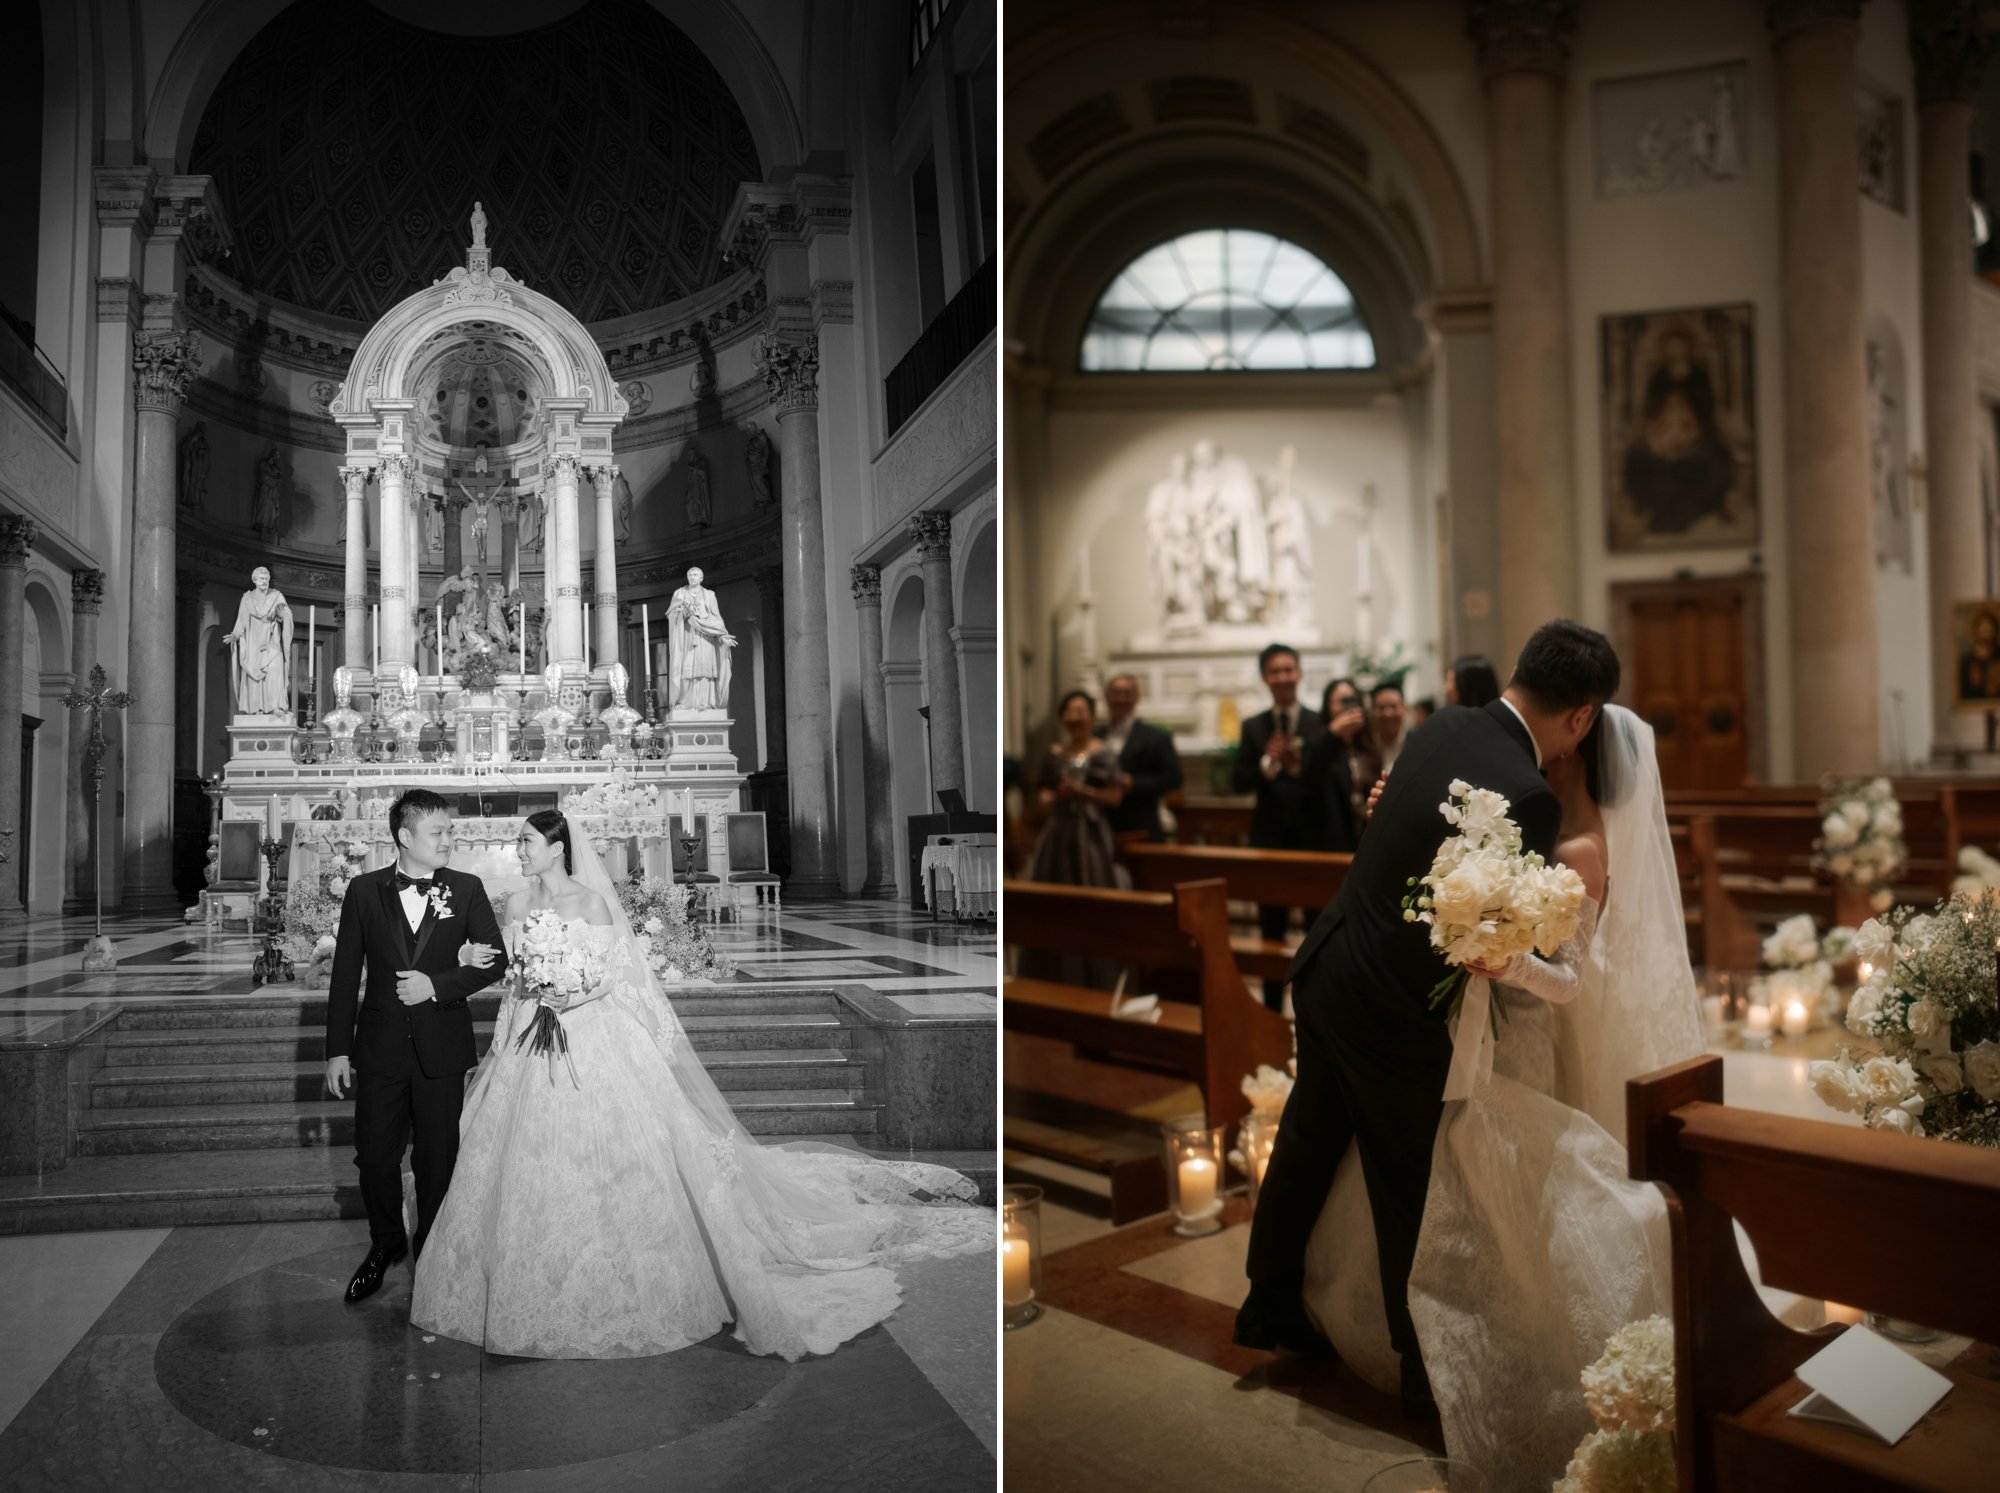 Prawira-Evelyn-Dolomites-Italy-Santre wedding-Yefta Gunawan-Jeriko MUA-Carol Kuntjoro Photography-63.jpg